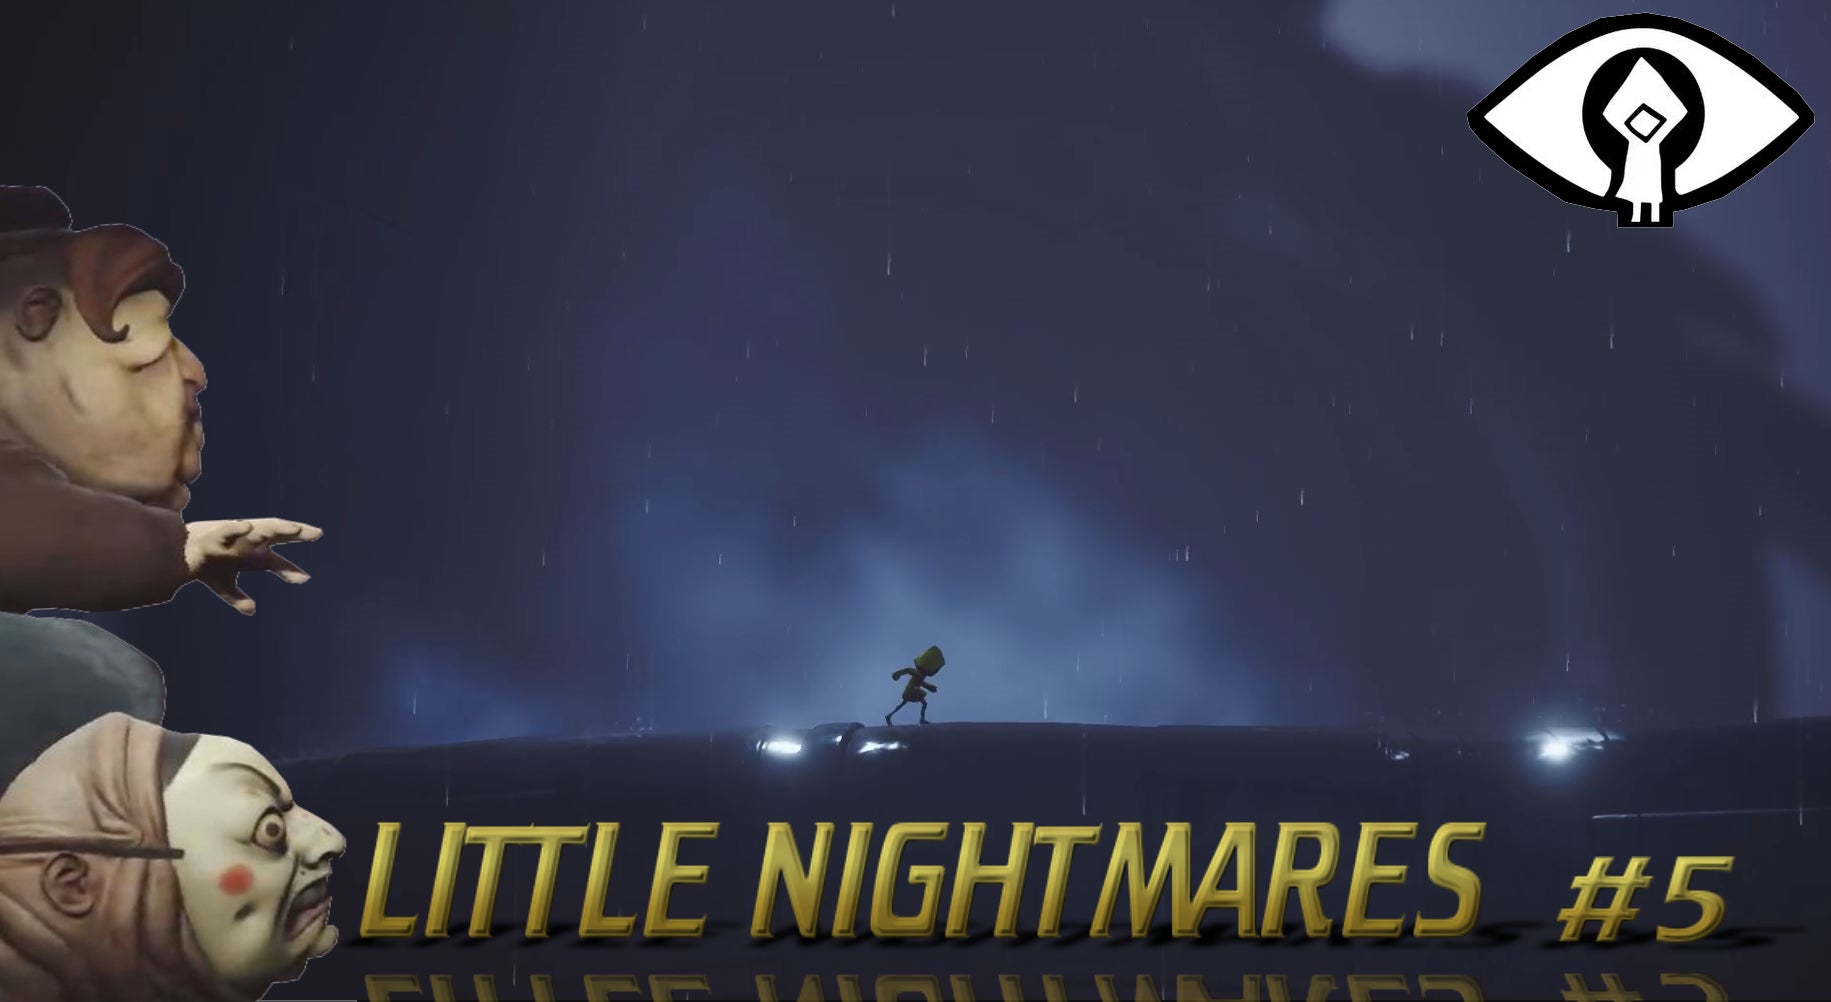 LITTLE NIGHTMARES II Announcement Trailer Hints At 2-Player Co-op Gameplay  — GameTyrant